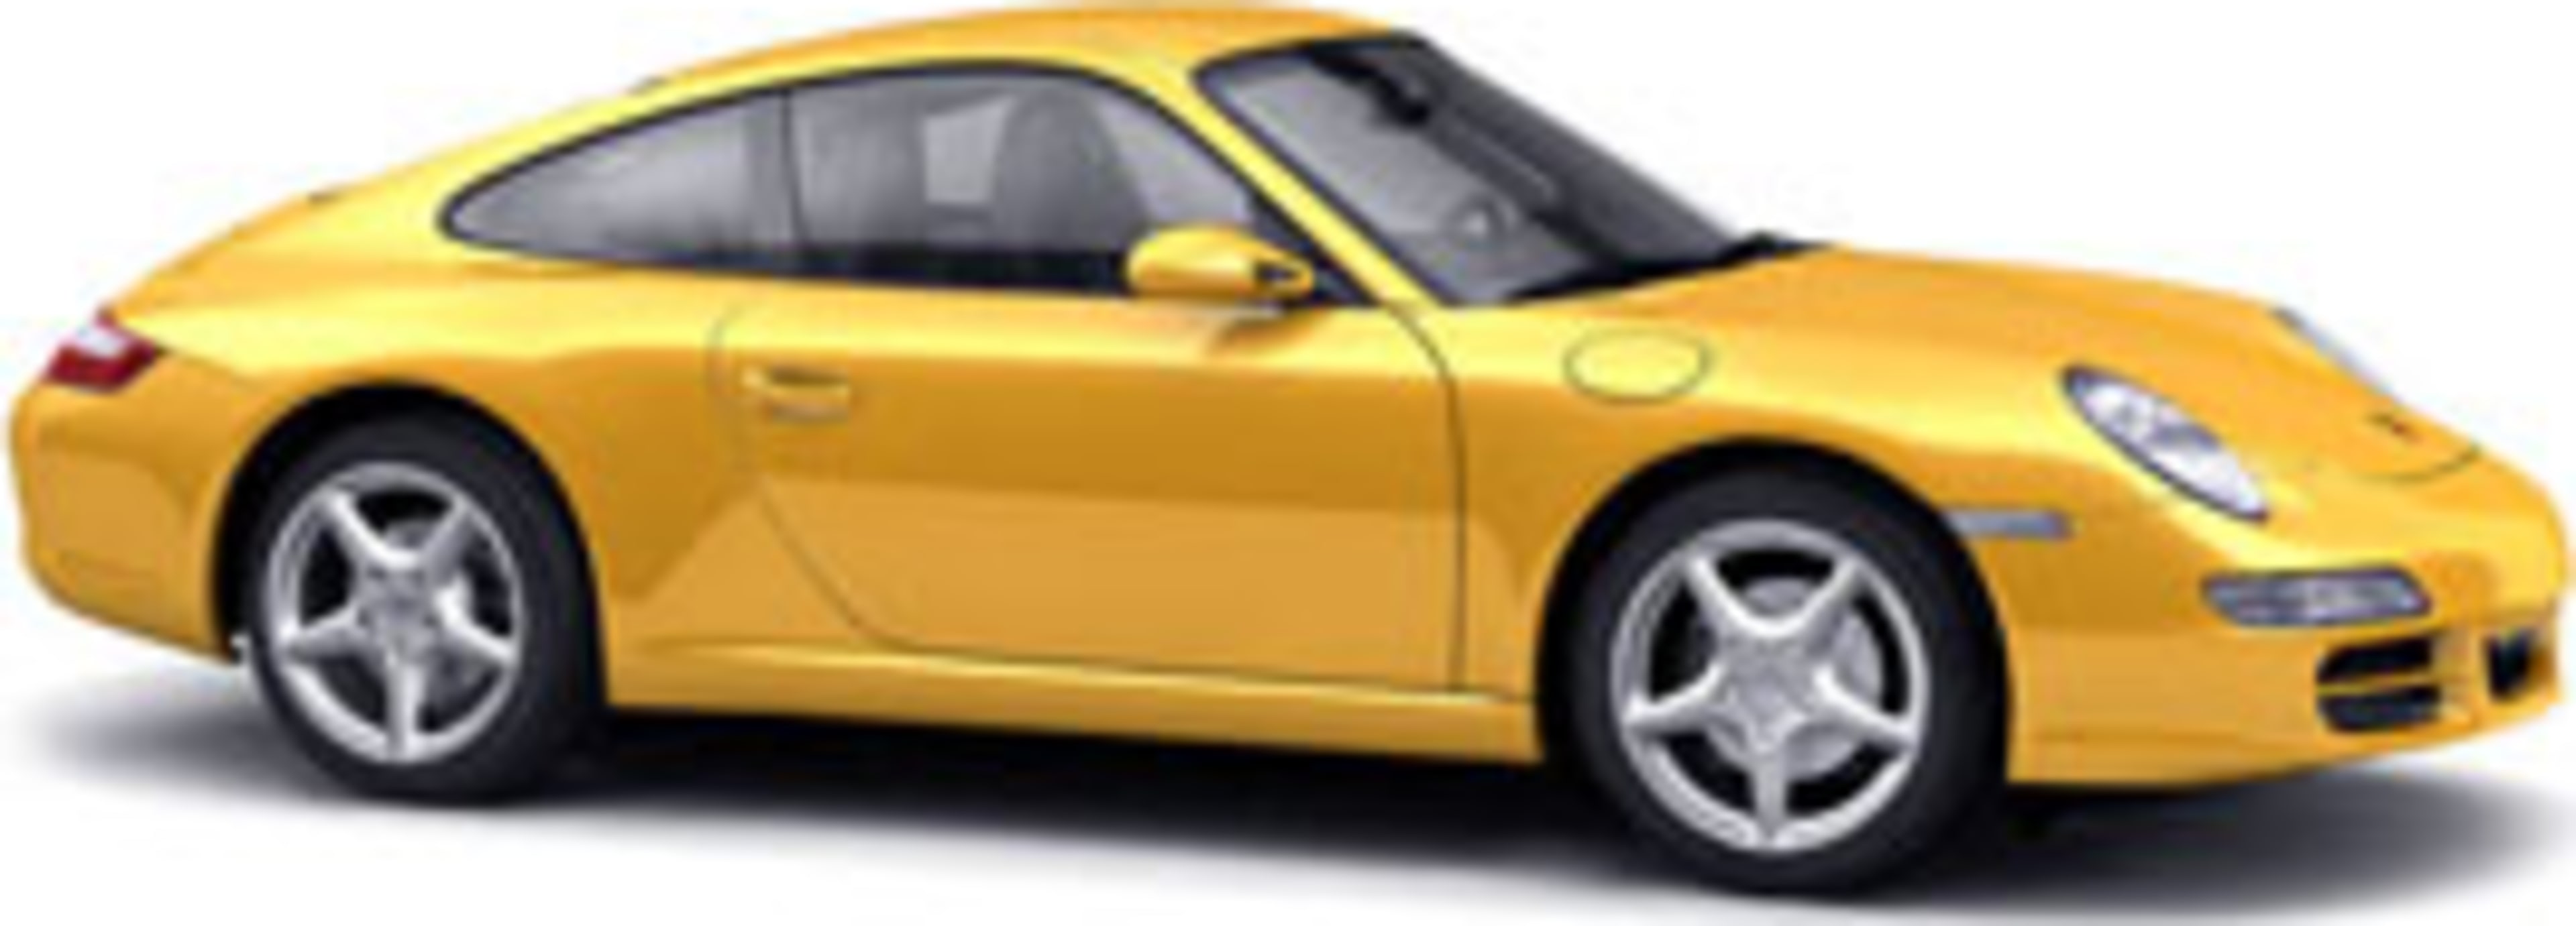 2005 Porsche 911 Service and Repair Manual